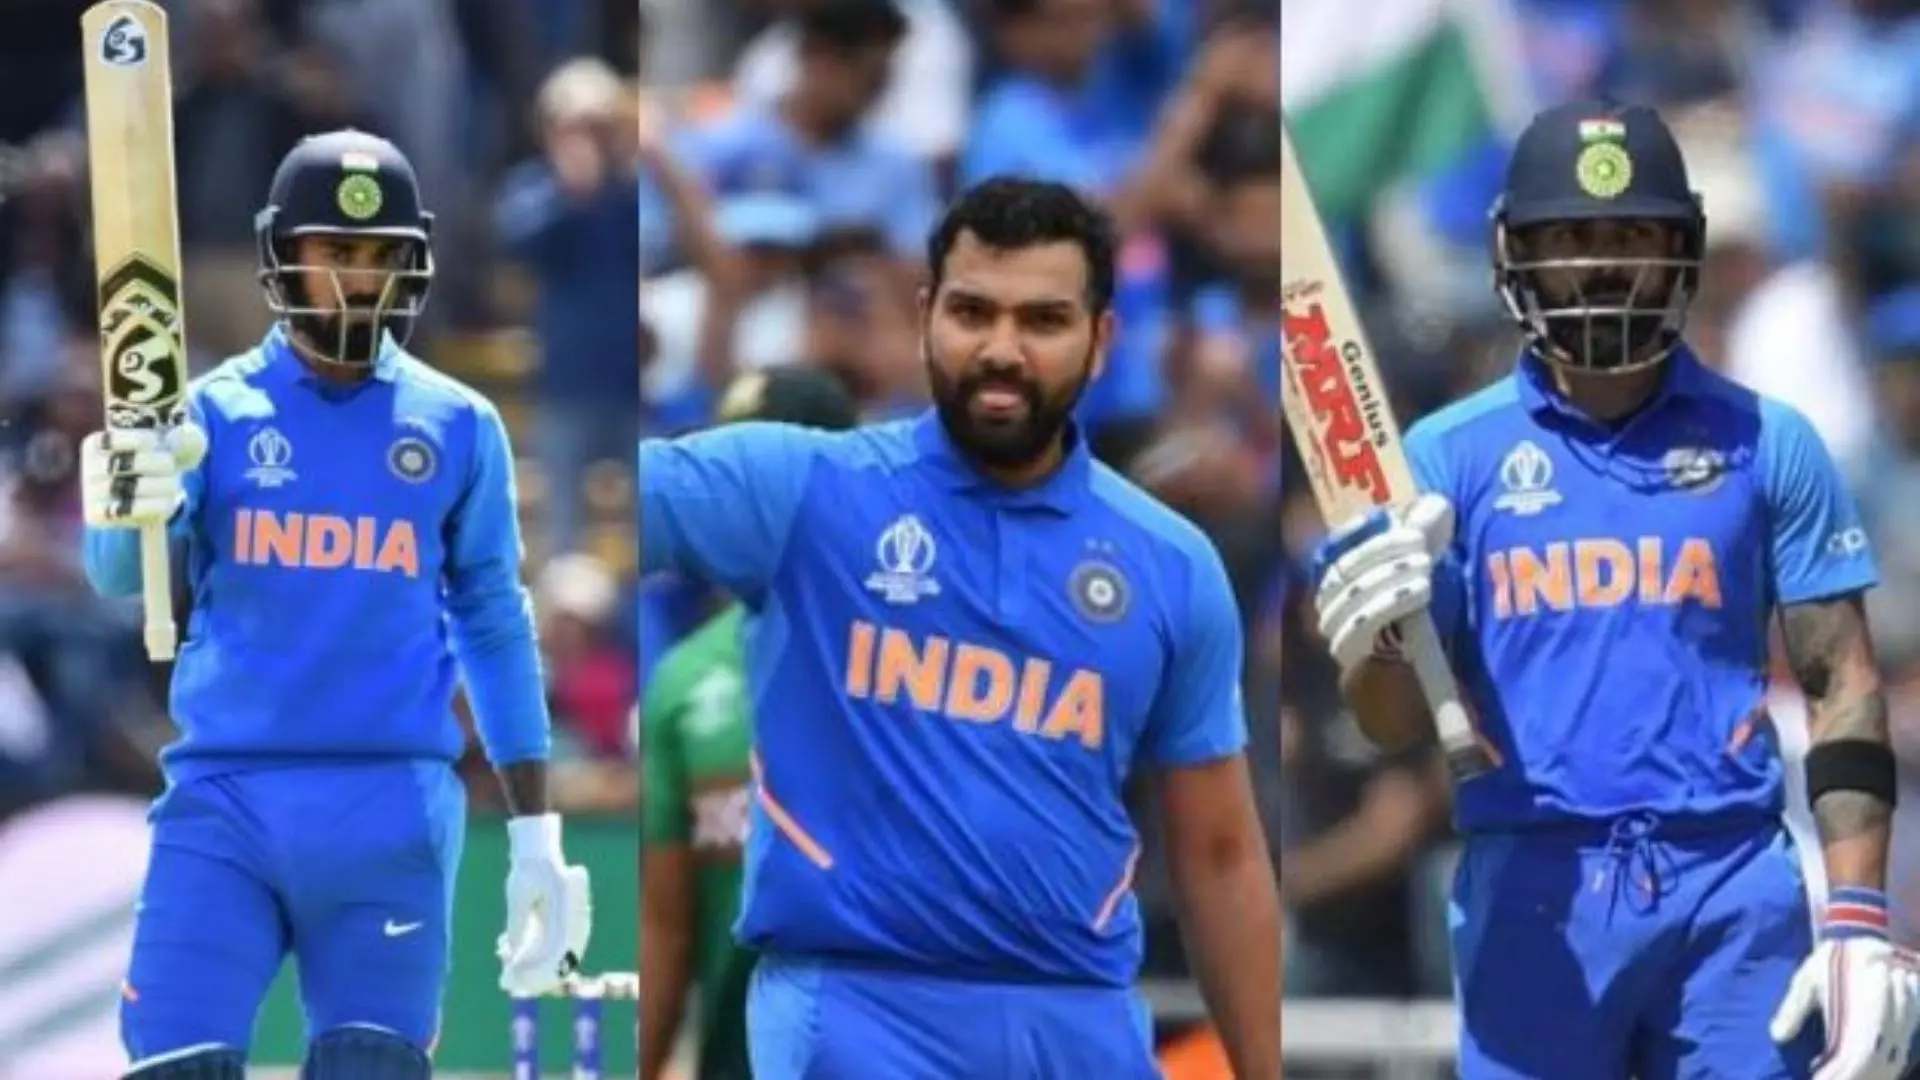 Sunil Gavaskar Says Rohit Sharma is the Next Team India T20 Captain After Virat Kohli